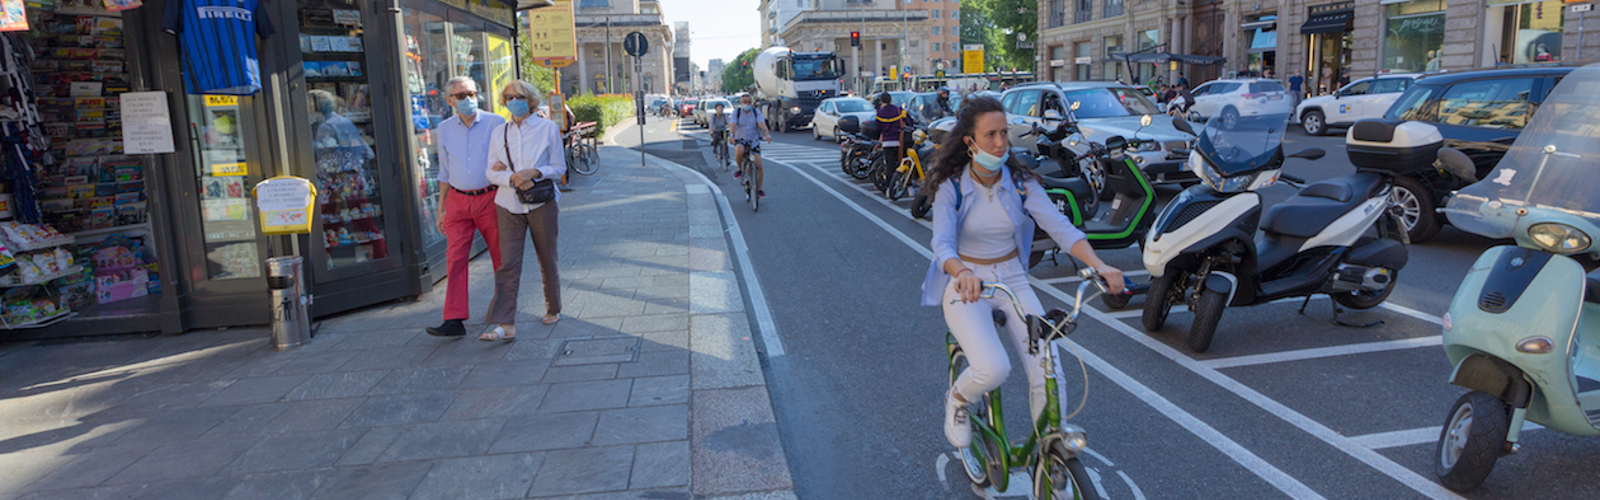 New cycle lane in Milan as city starts to reopen after coronavirus lockdown